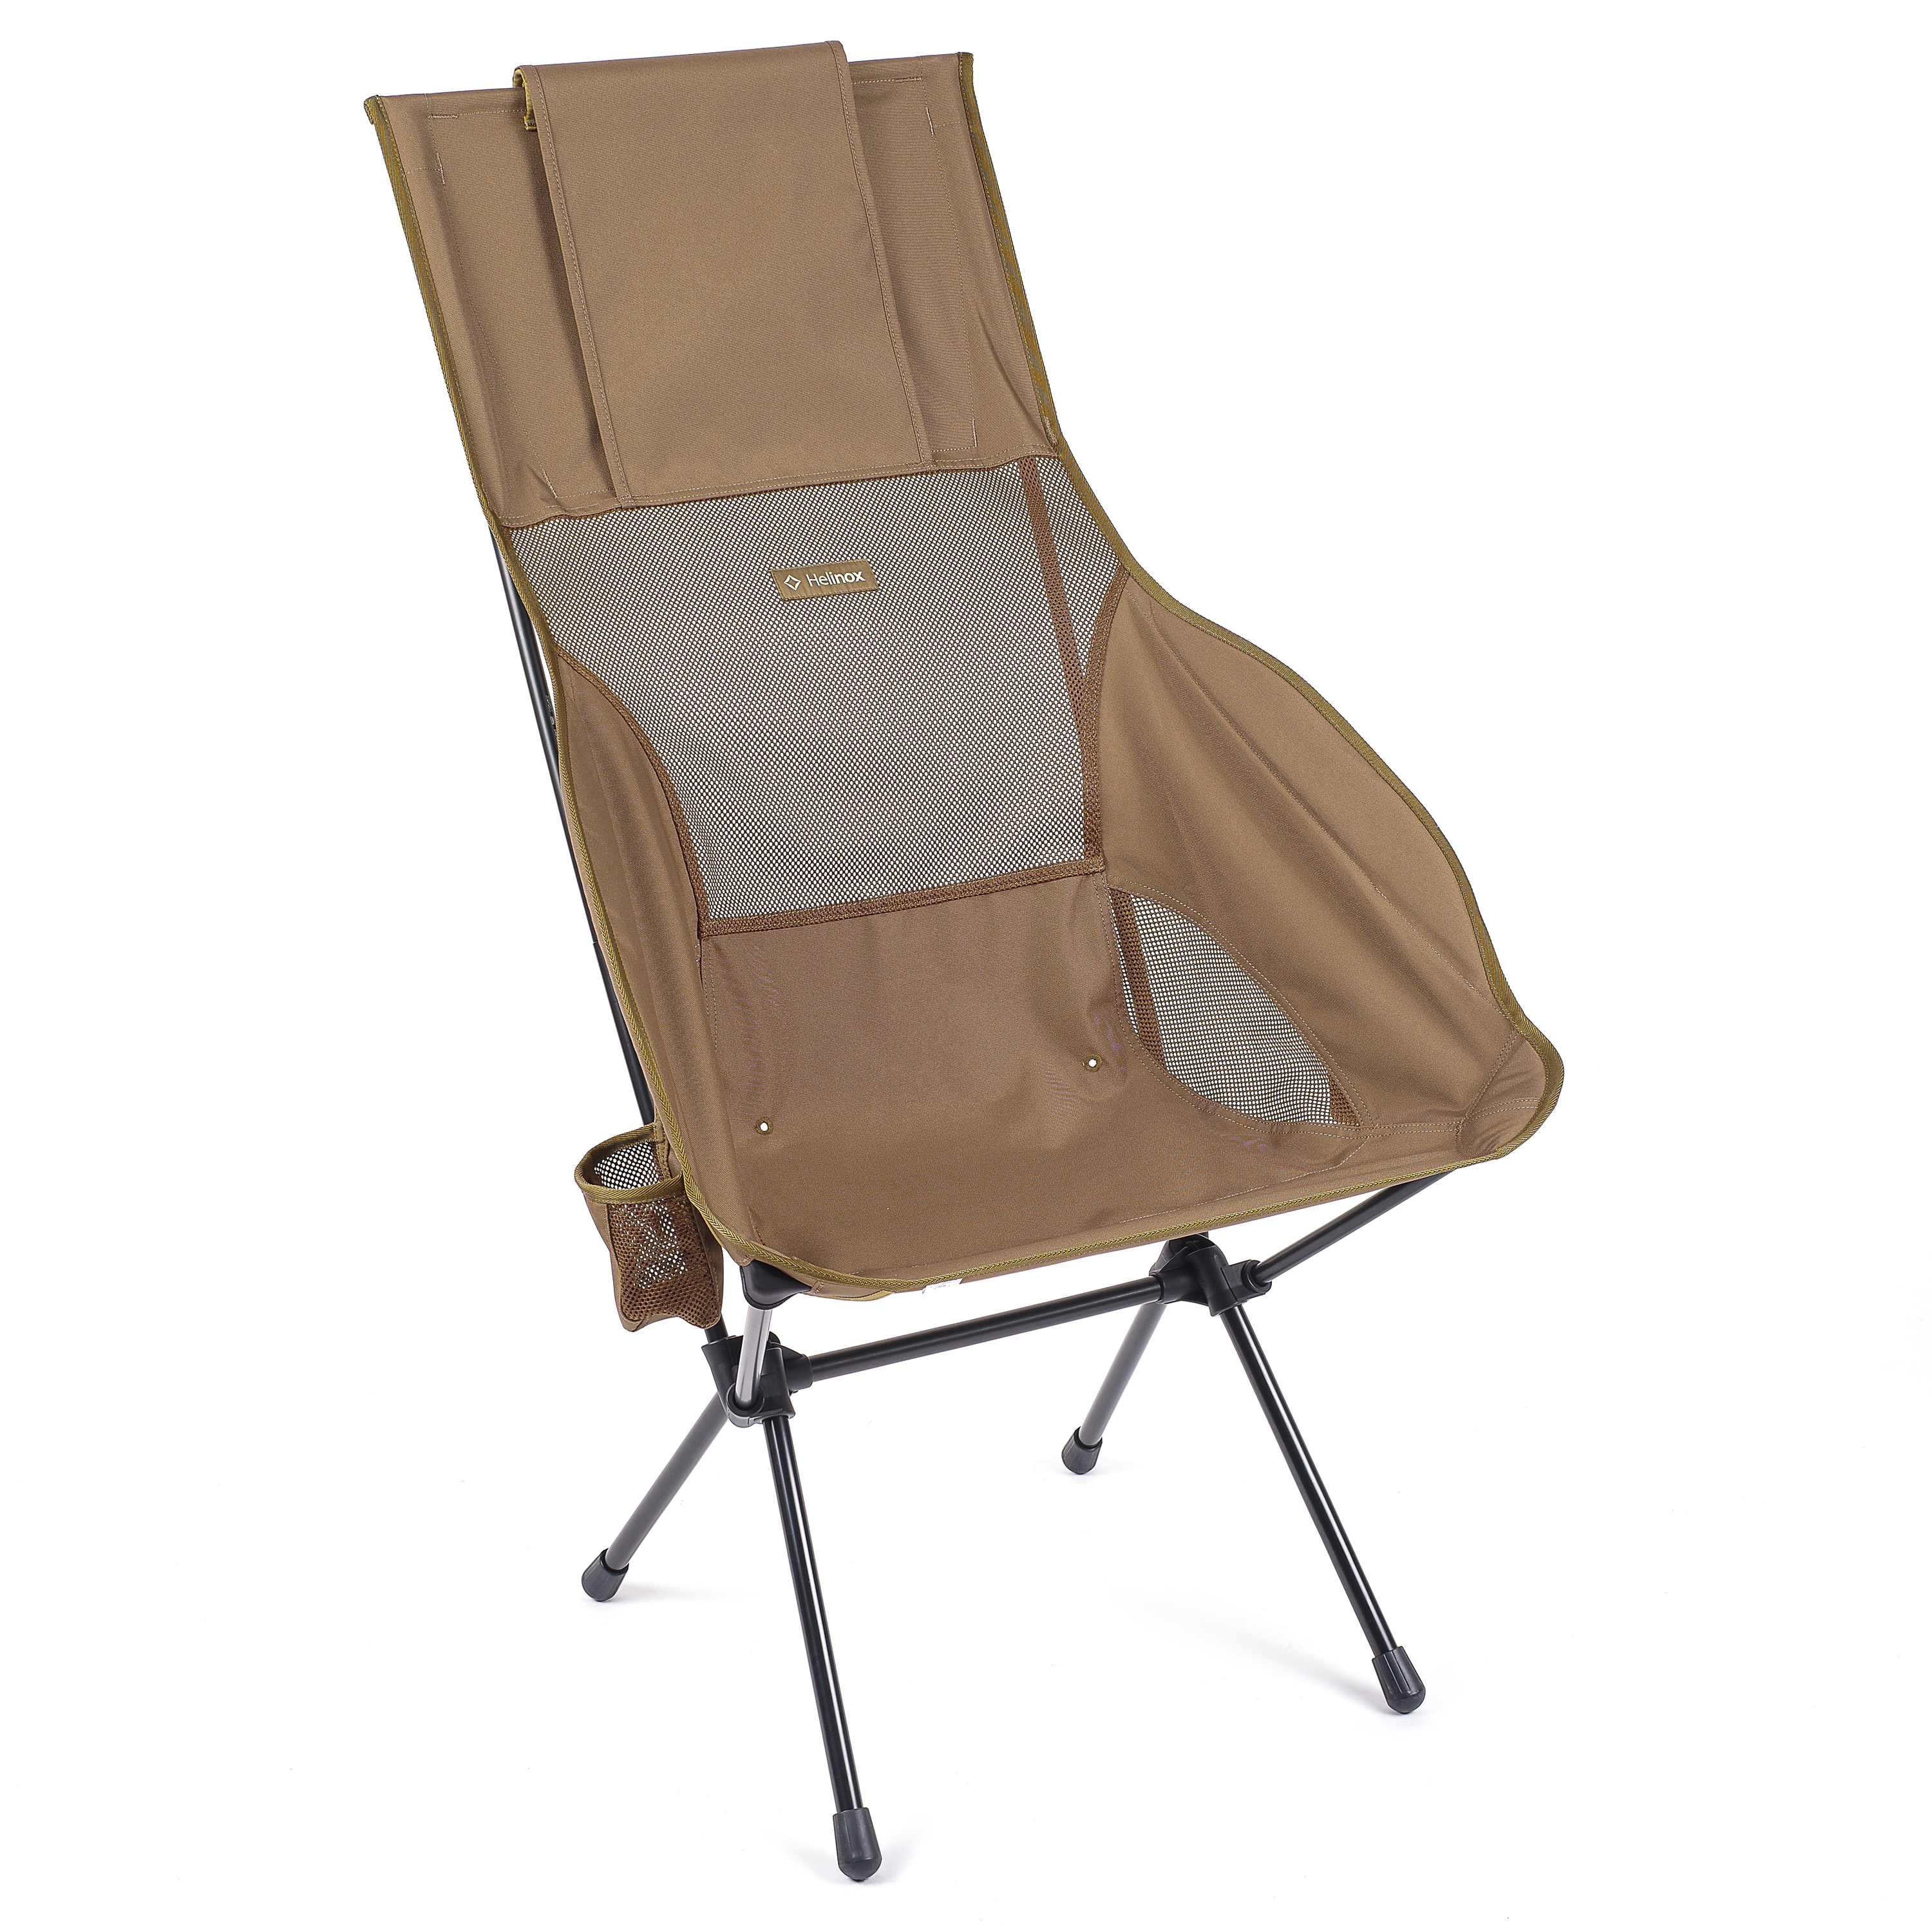 Helinox Savanna Lightweight Deluxe Camping Chair